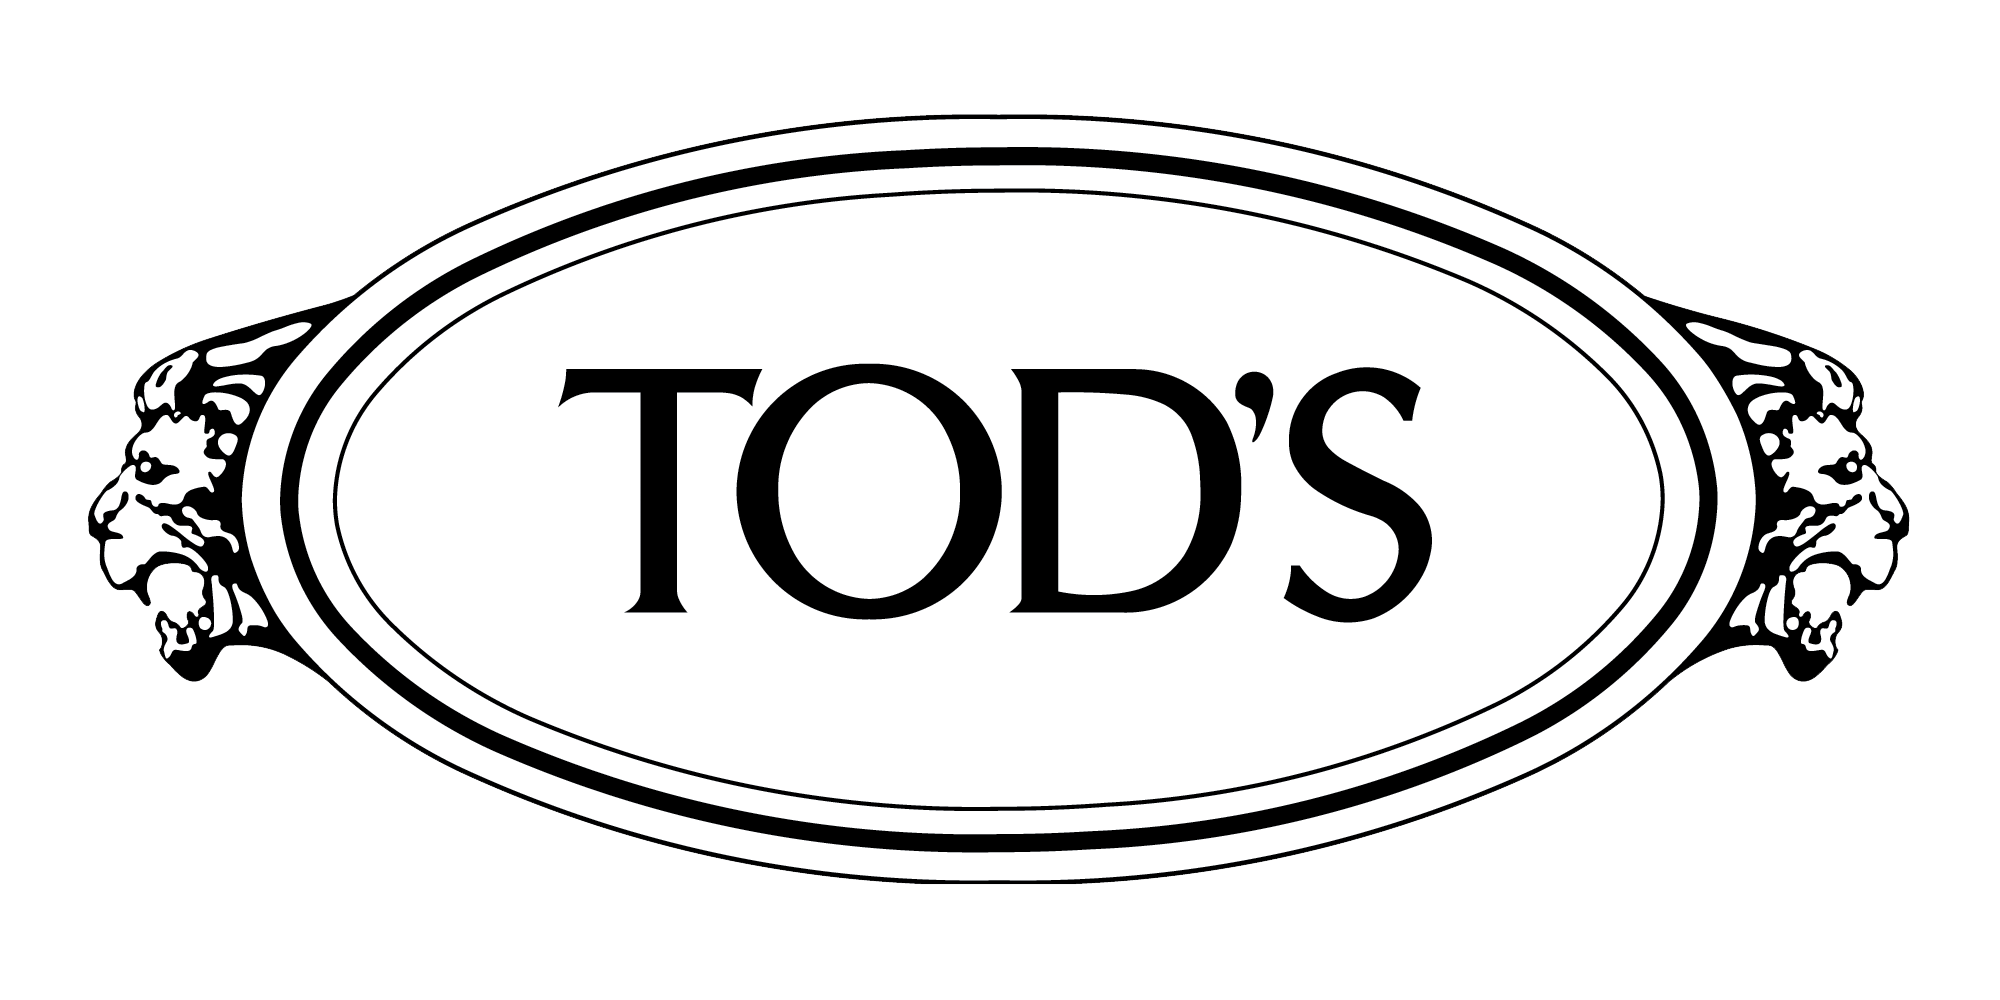 Tod's - Wikipedia